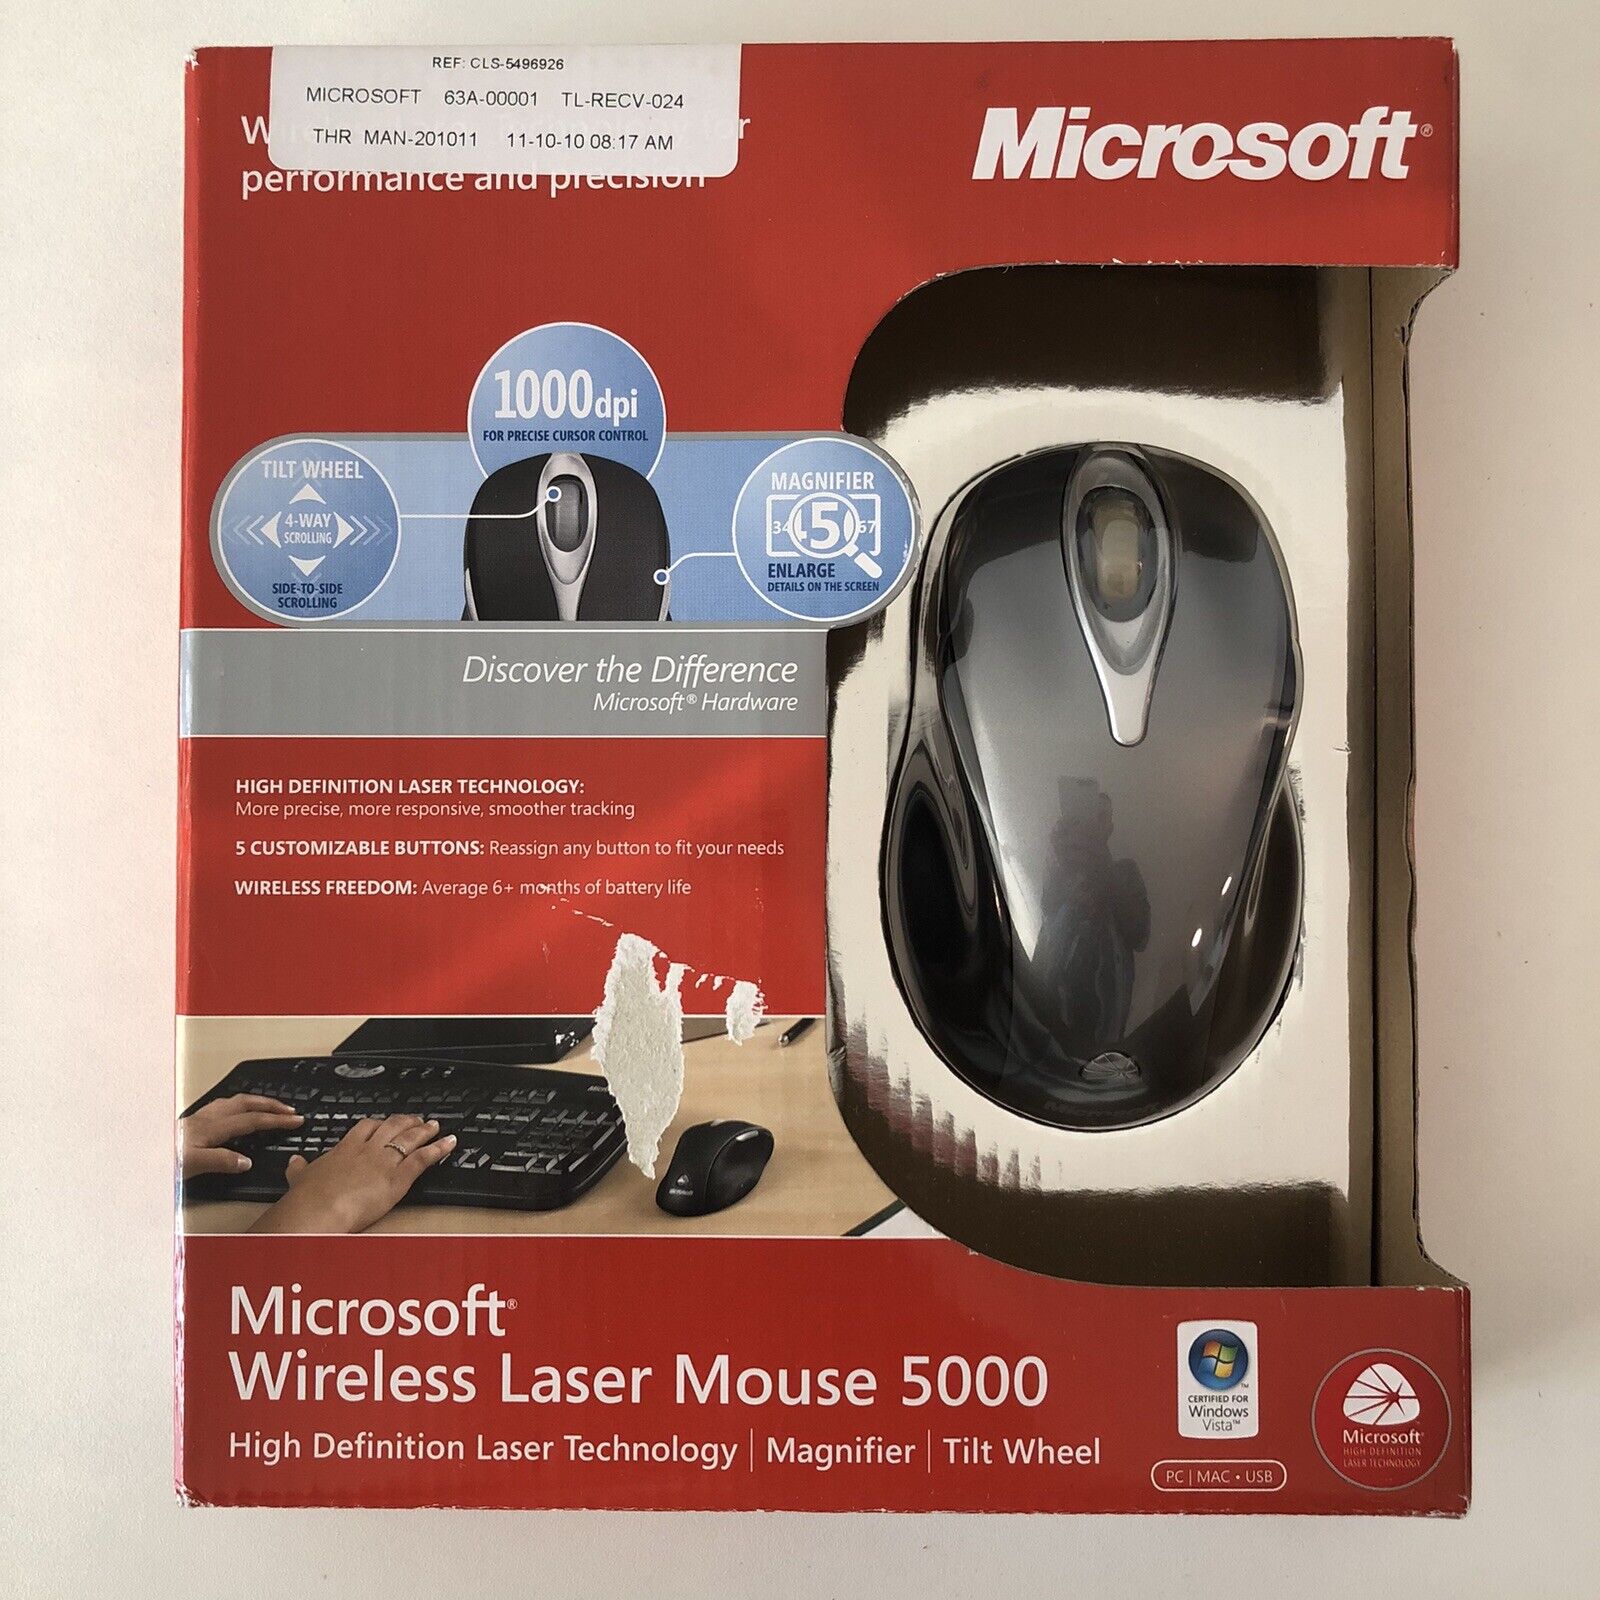 Microsoft Wireless Laser Mouse 5000 Model 1058 w/ USB Receiver Model 1053, Works